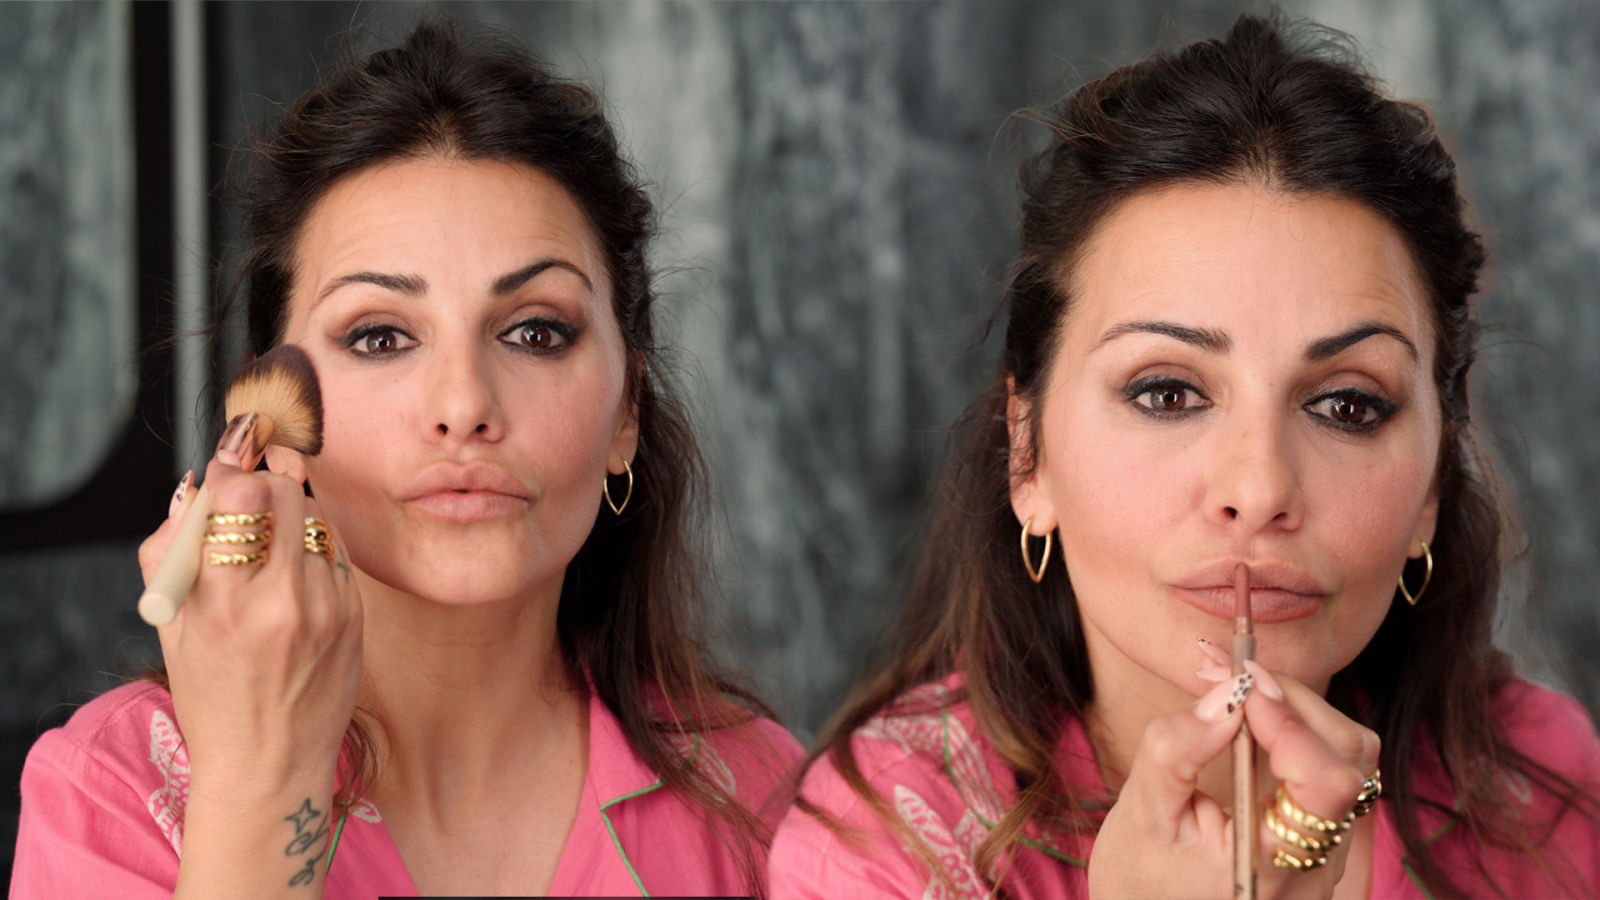  Mónica Cruz: maquillaje natural con eyeliner marcado | Secretos de belleza 